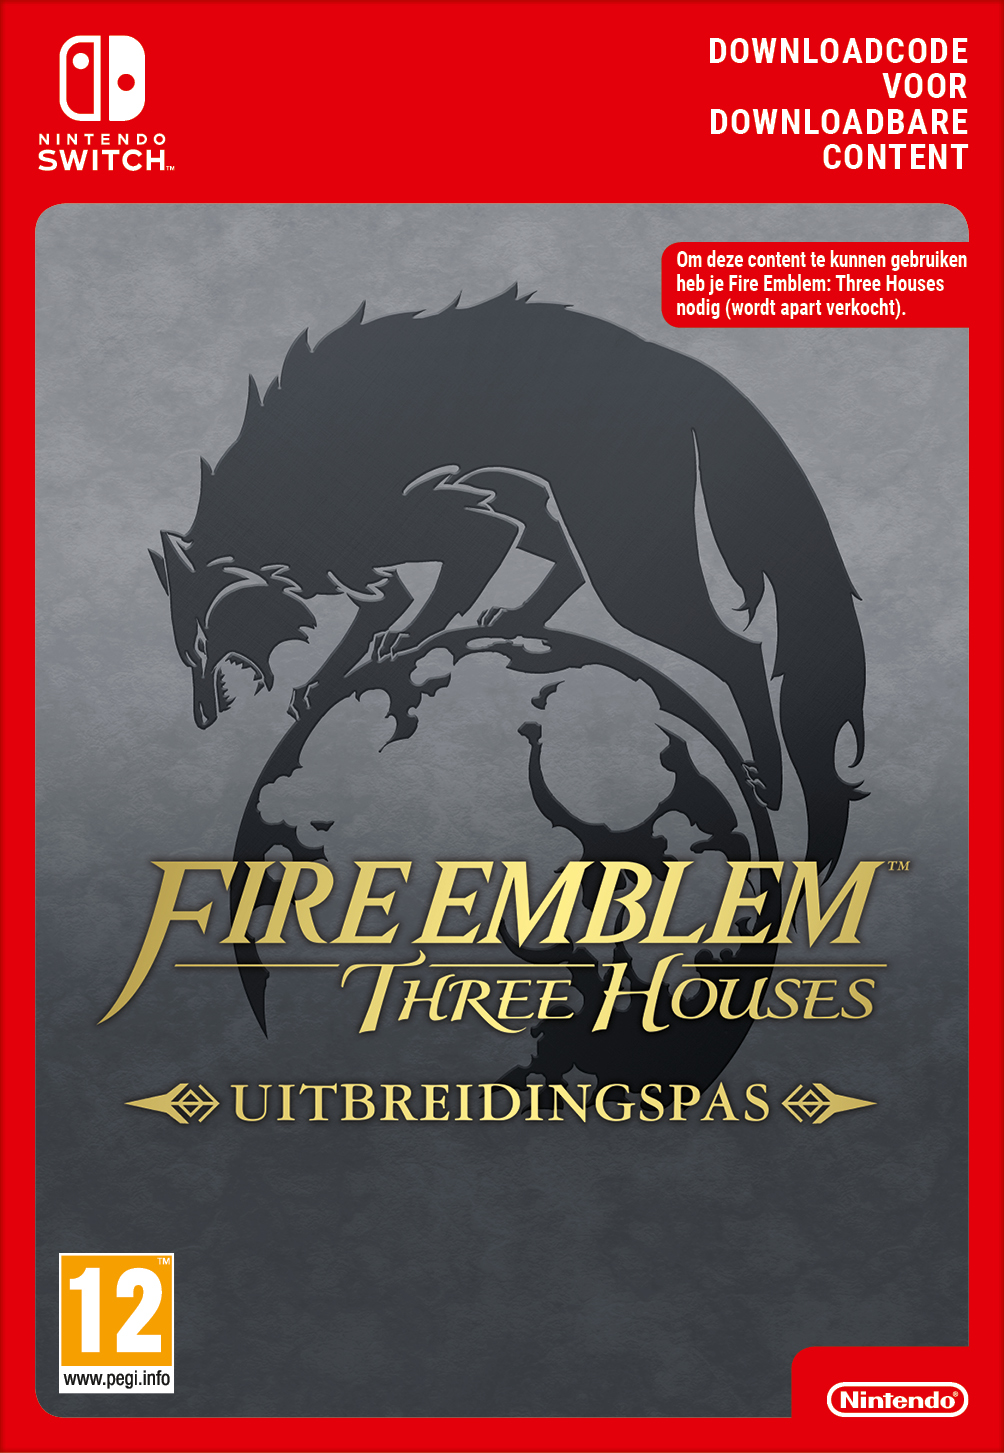 Fire Emblem Three Houses - Expansion Pass